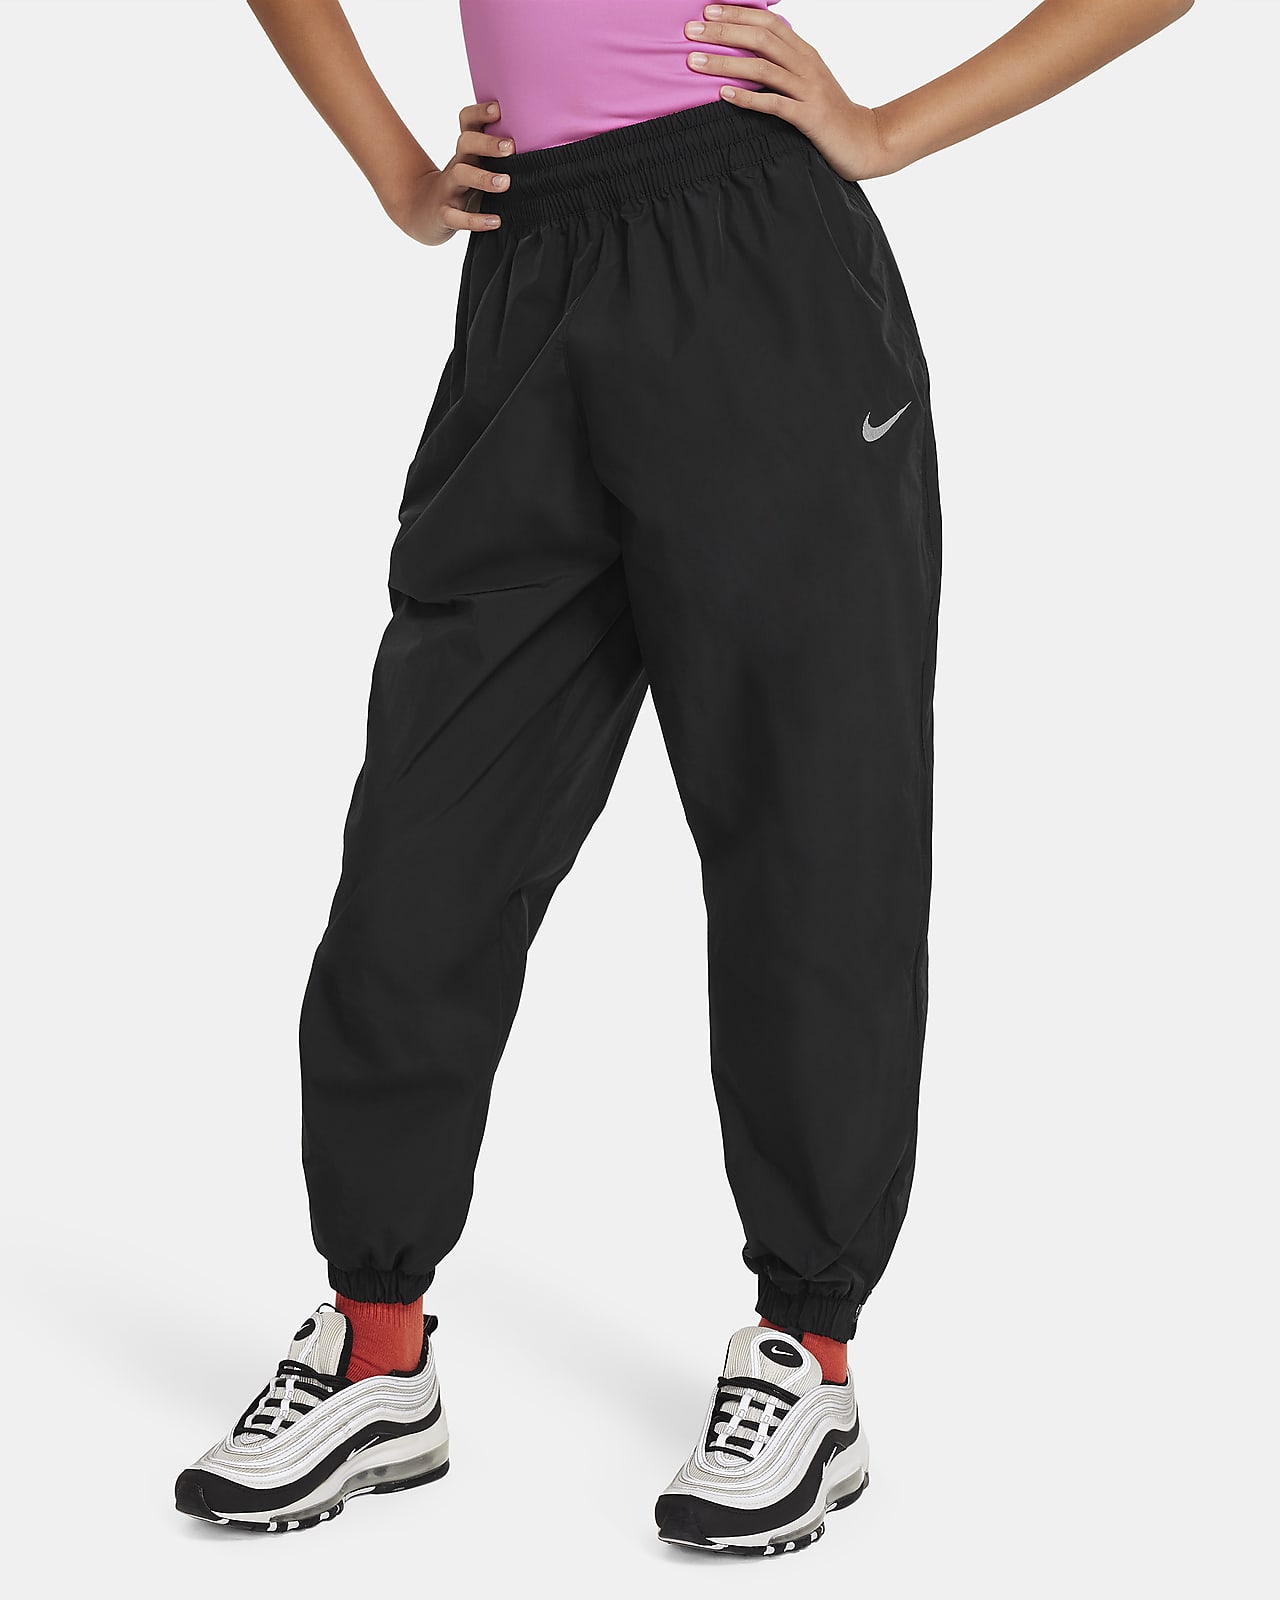 Pants de tejido Woven para niña talla grande Nike Sportswear